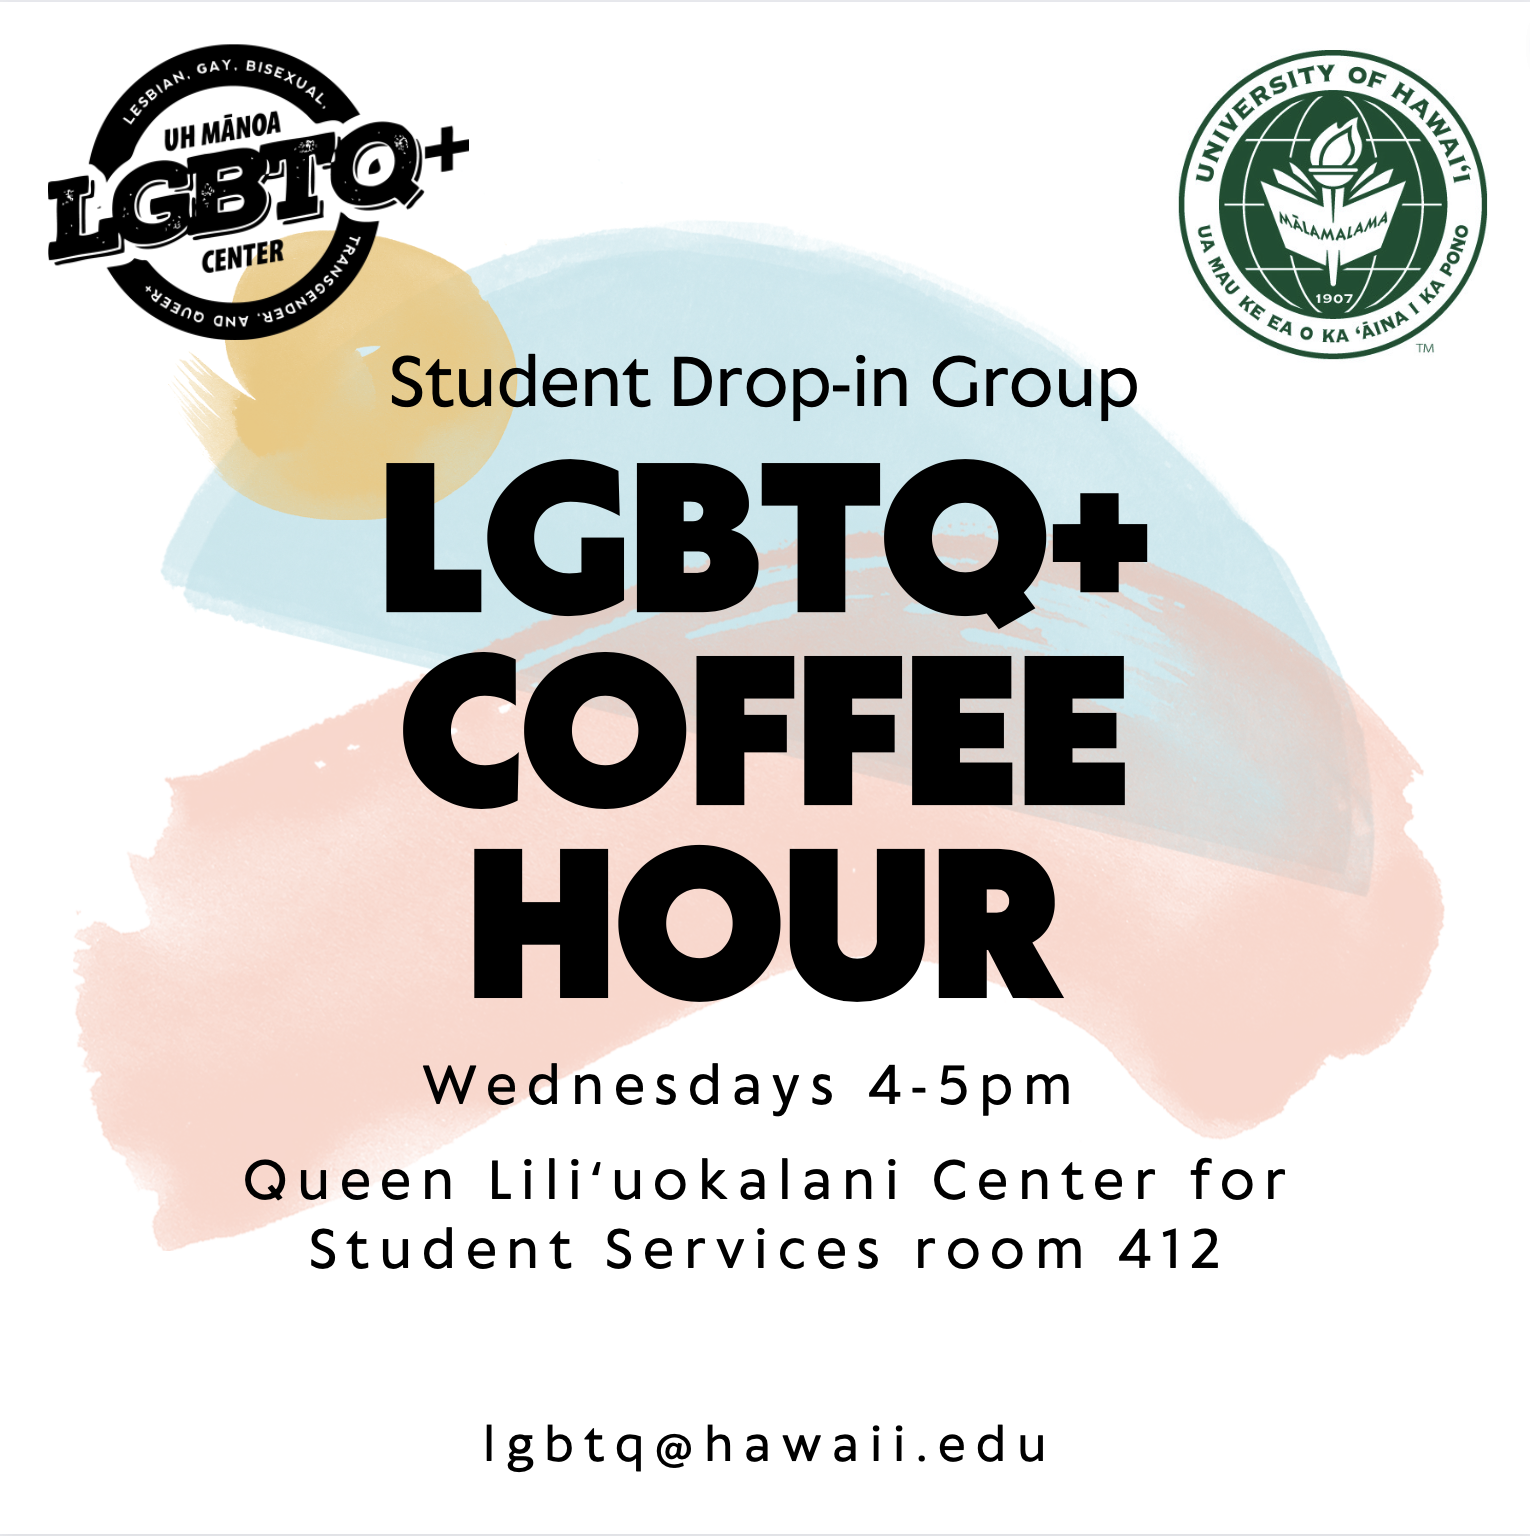 LGBTQ+ Coffee Hour poster image